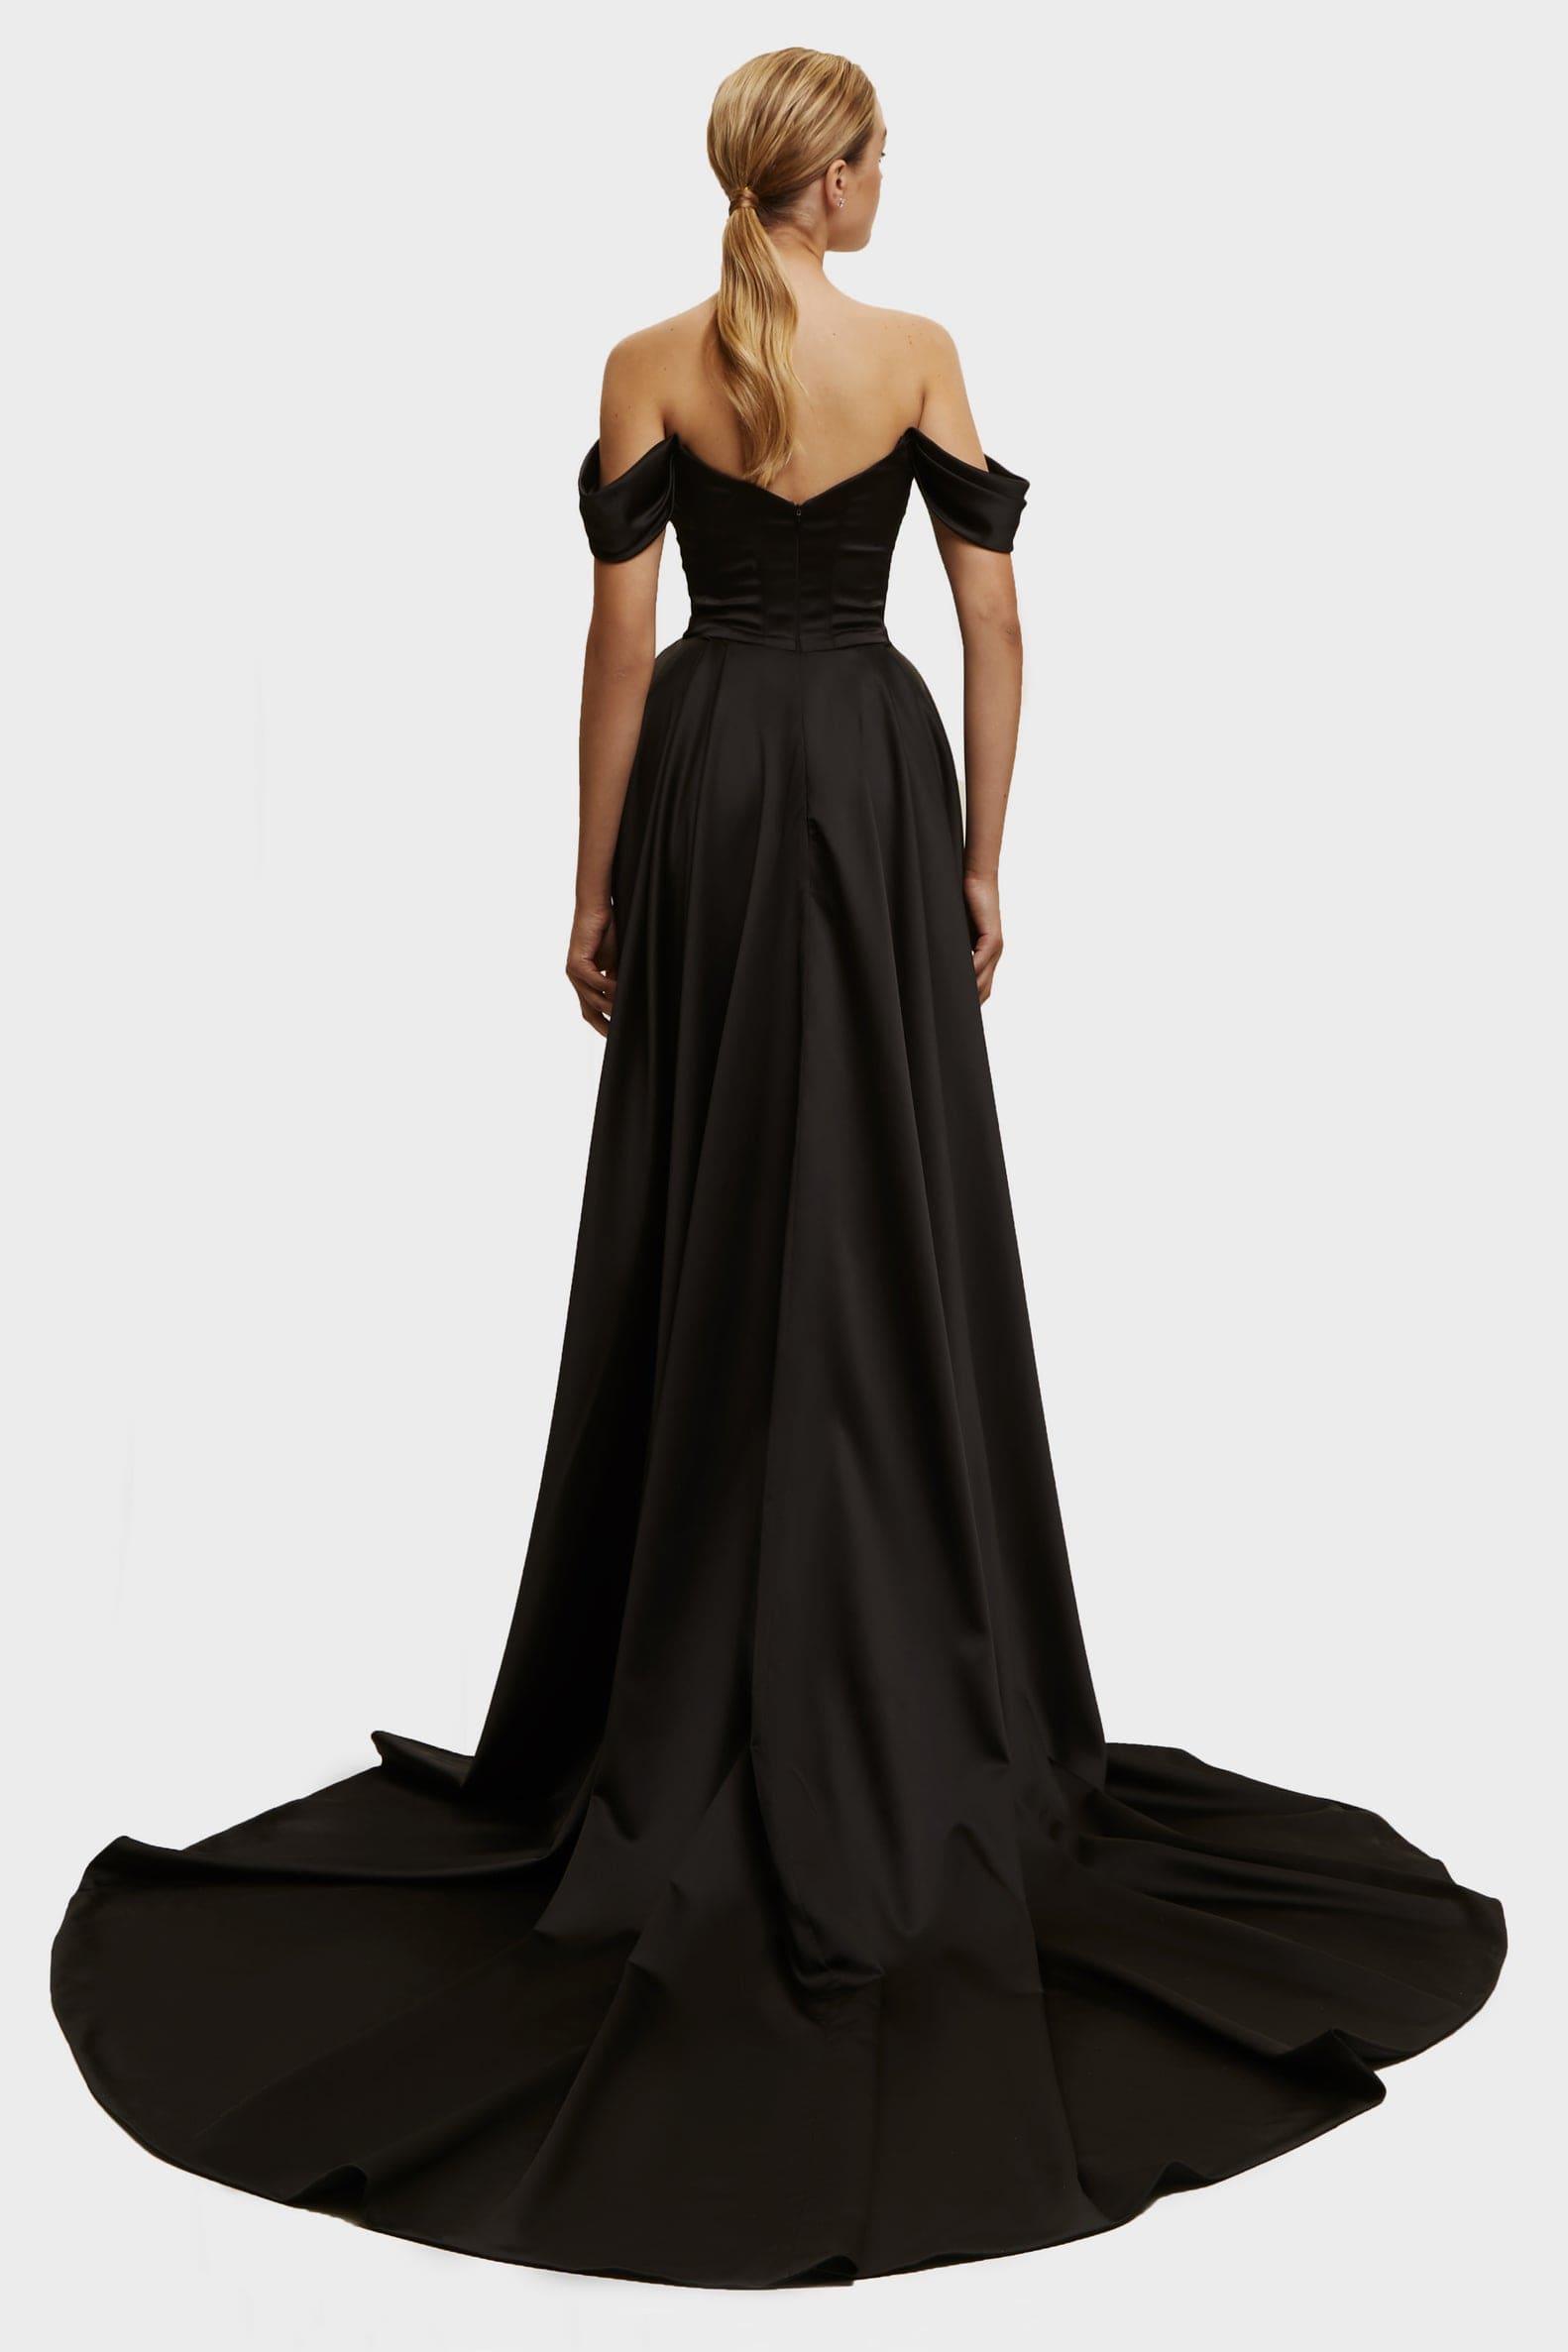 Black Gothic Princess Ball Gown Wedding Dress | Black wedding gowns, Black  wedding dresses, Ball gown wedding dress